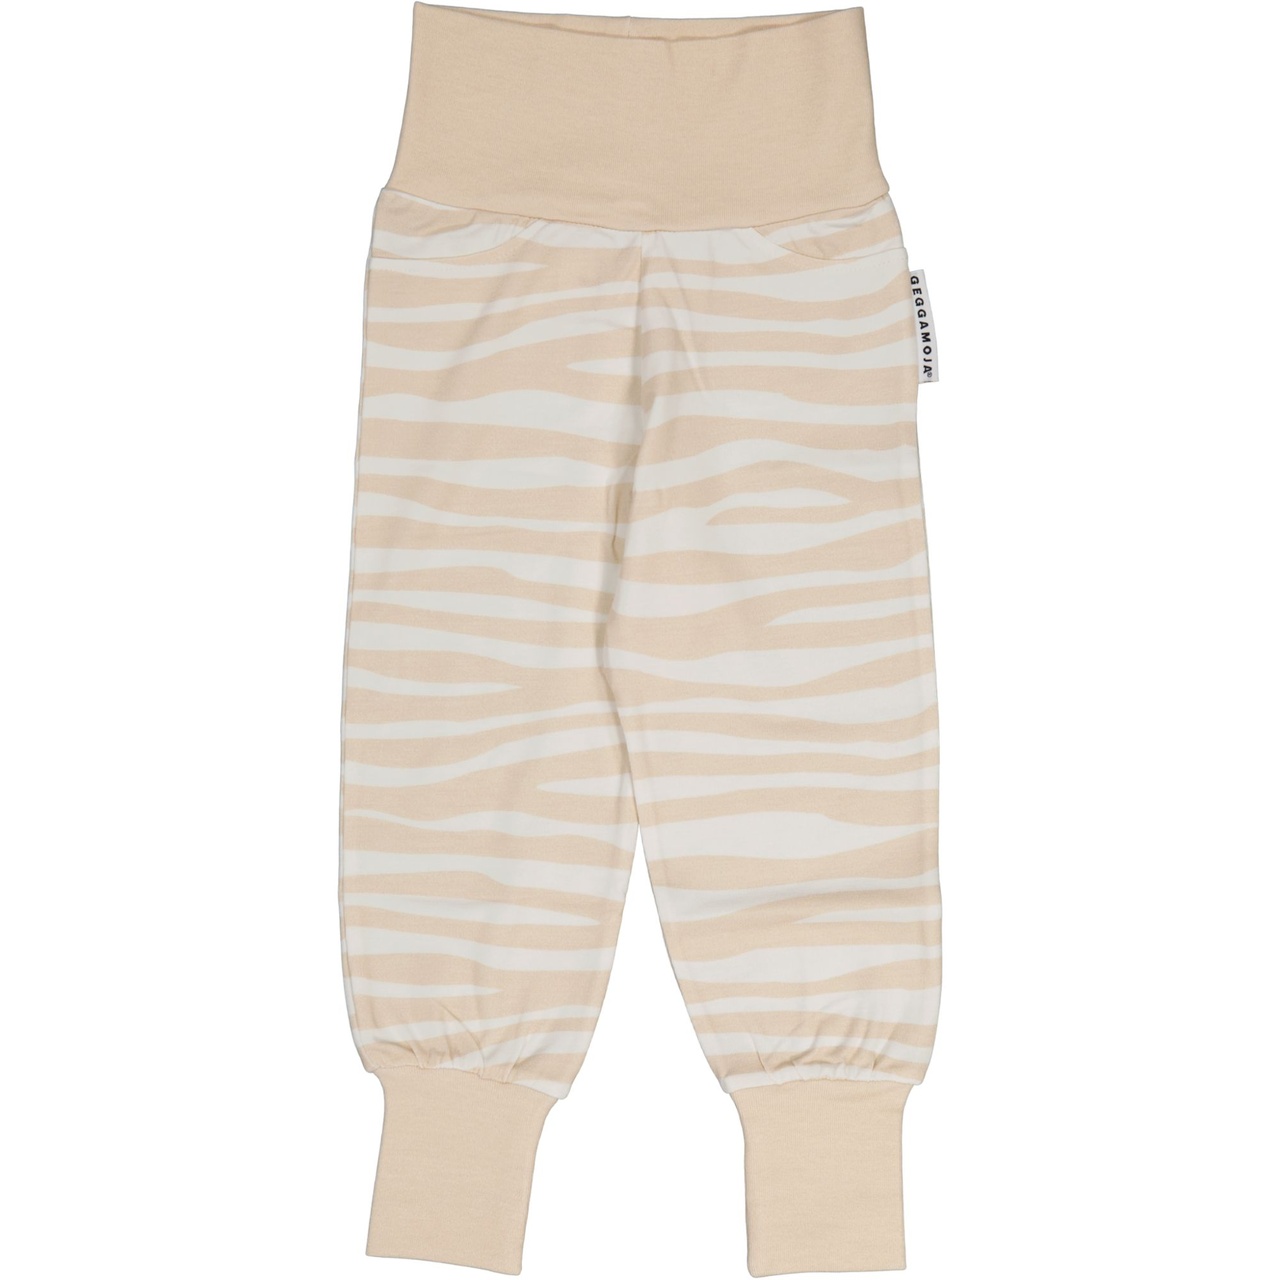 Bamboo Vauvan housut Soft beige zebra  62/68